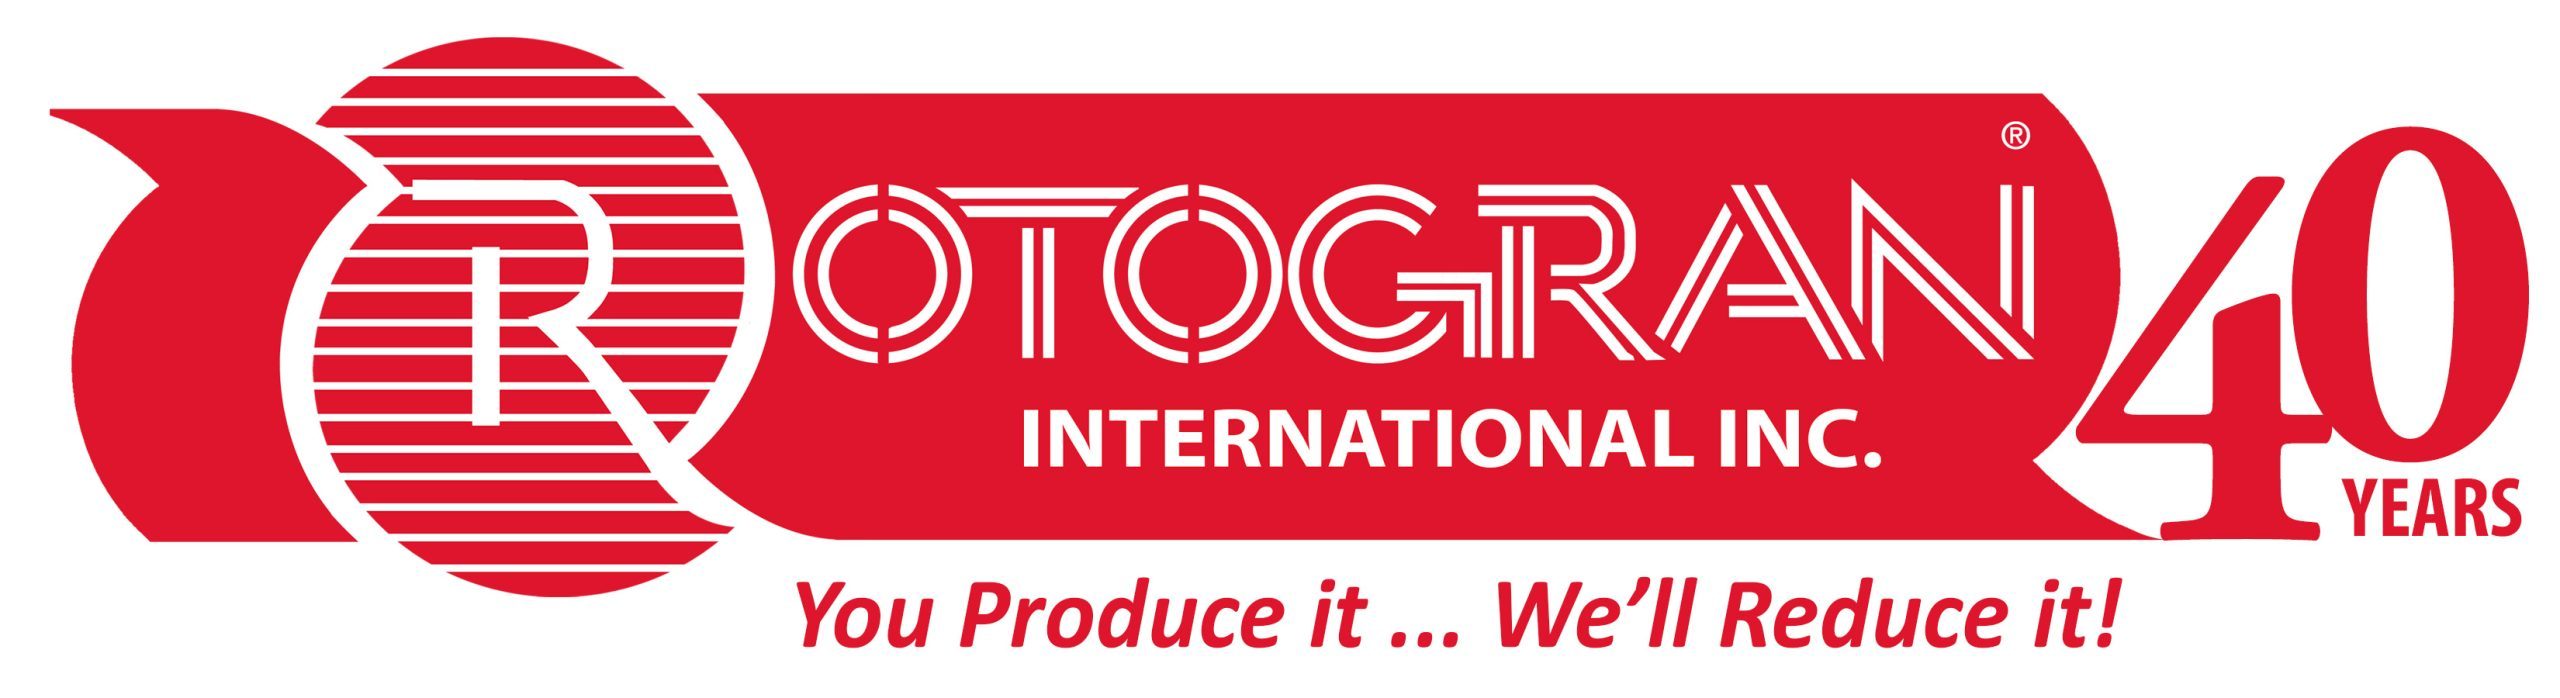 ROTOGRAN_logo40years_with slogan_Feb15_2022